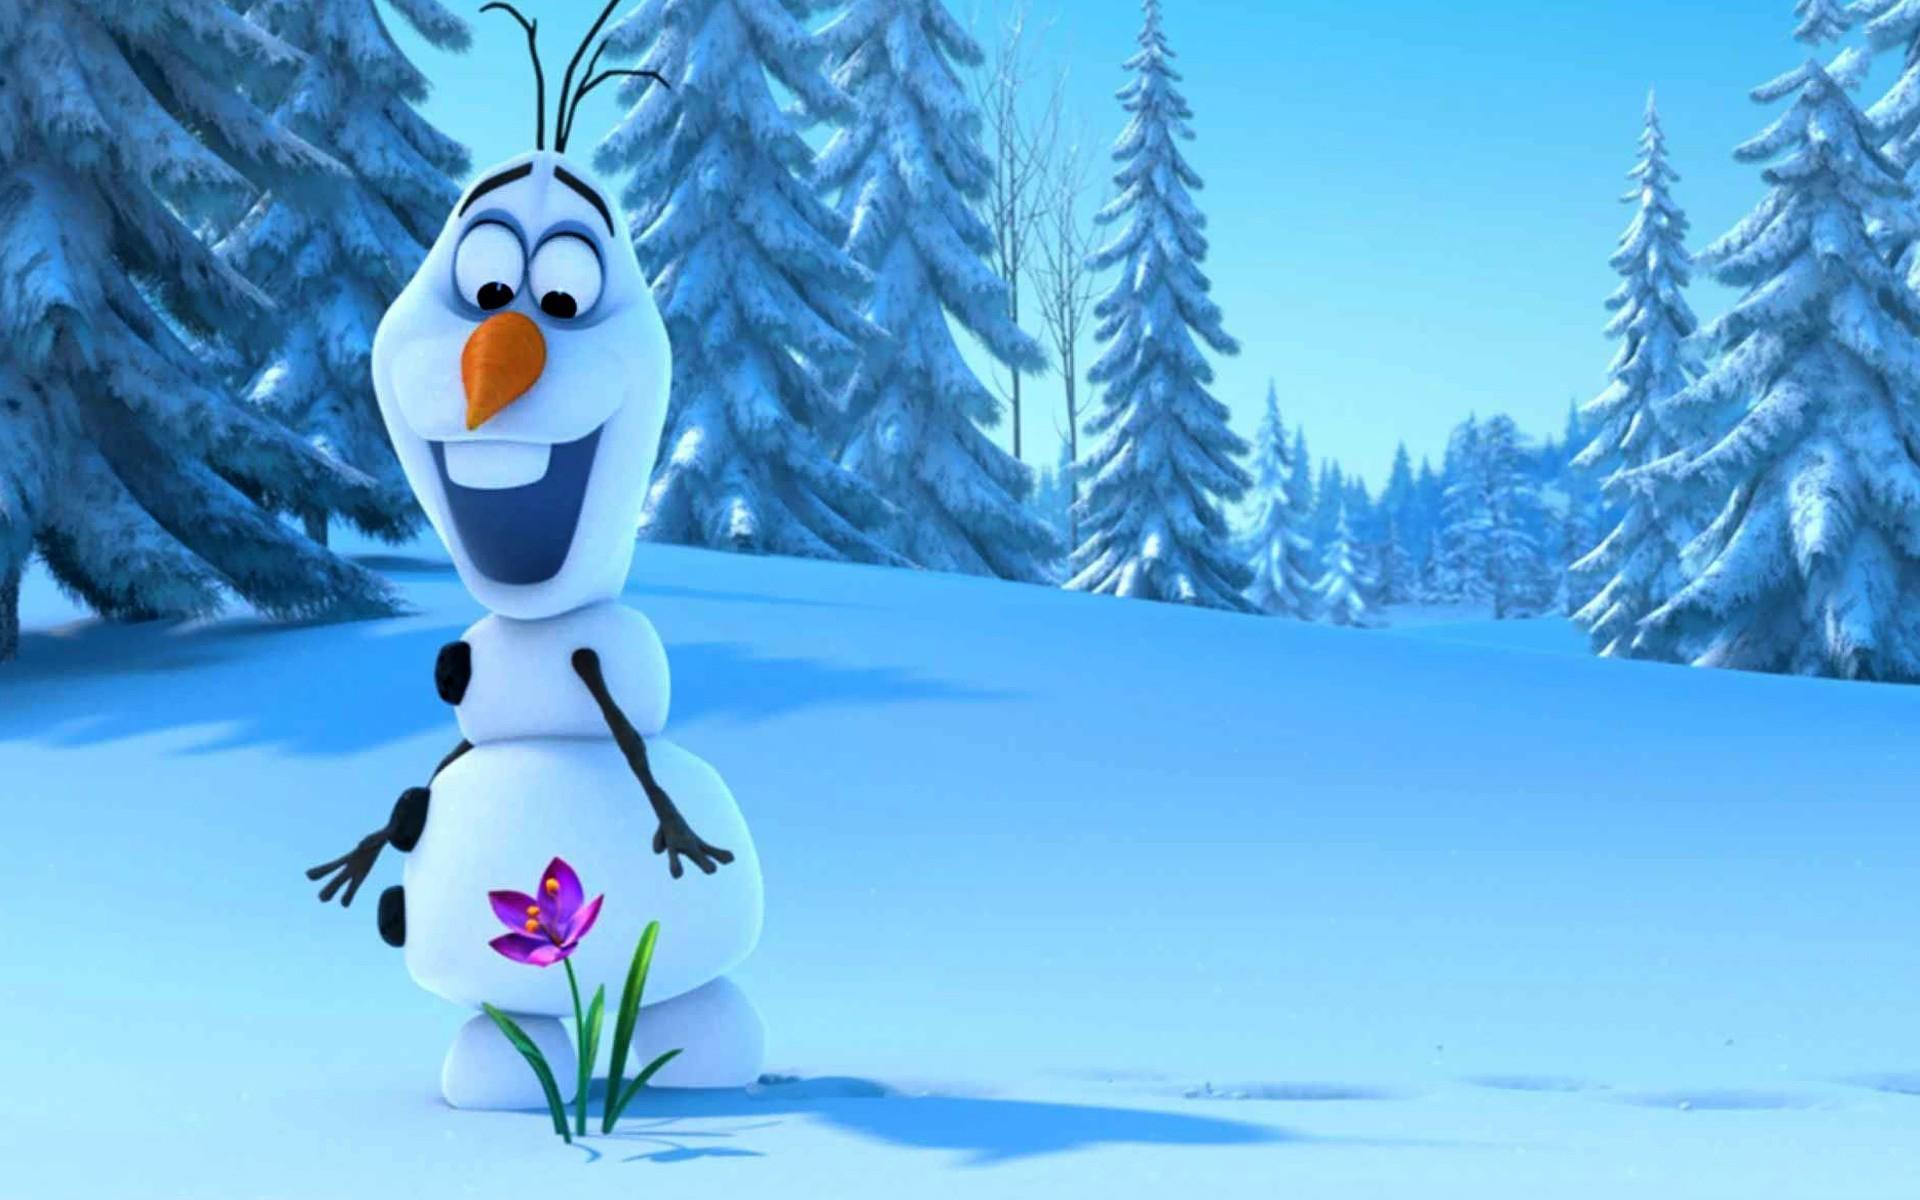 Cute Cartoon Olaf Snowman Frozen Wallpaper. Foolhardi